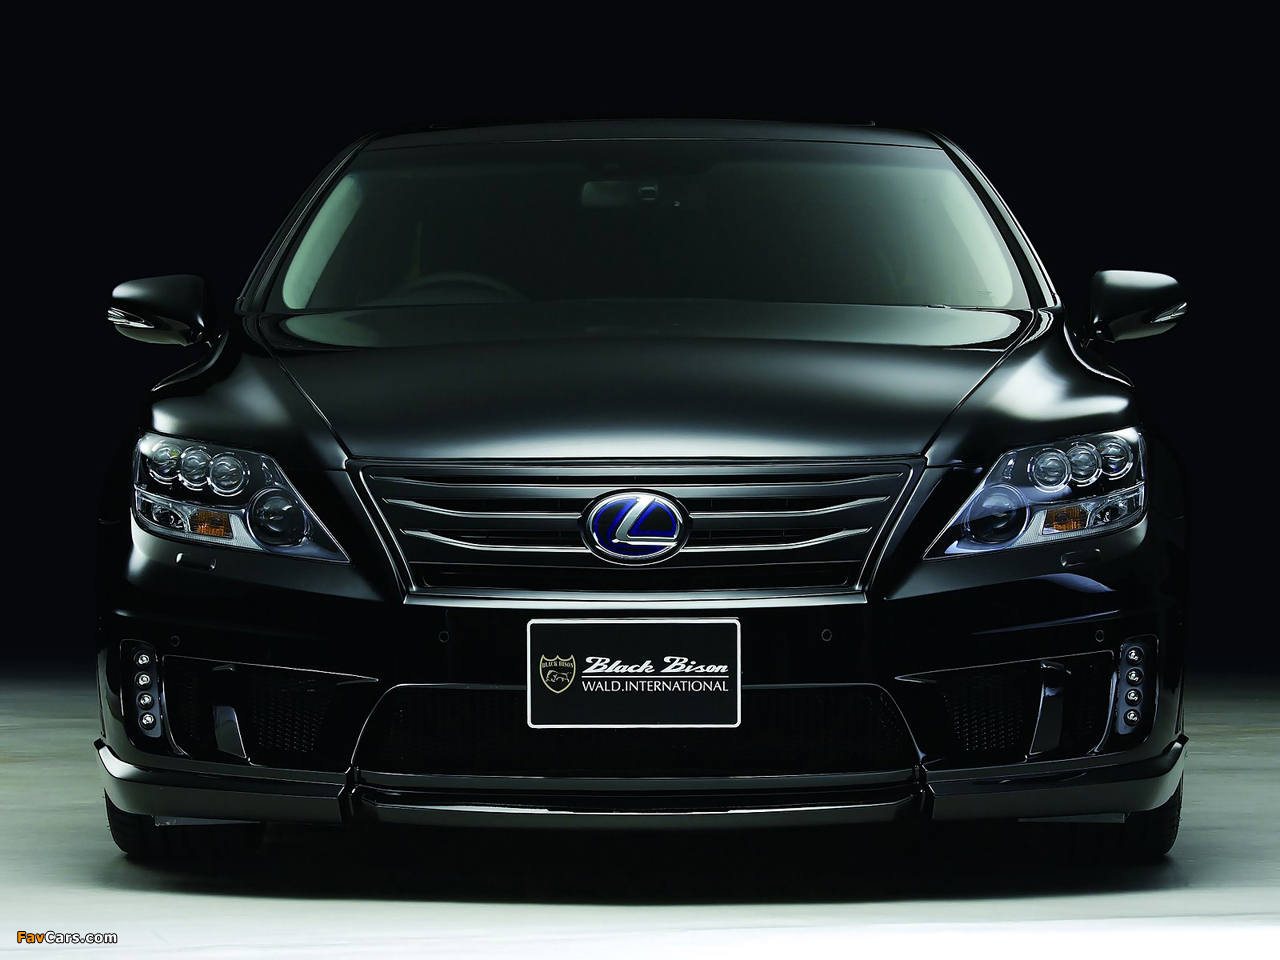 WALD Lexus LS 600h Black Bison Edition (UVF45) 2010 pictures (1280 x 960)